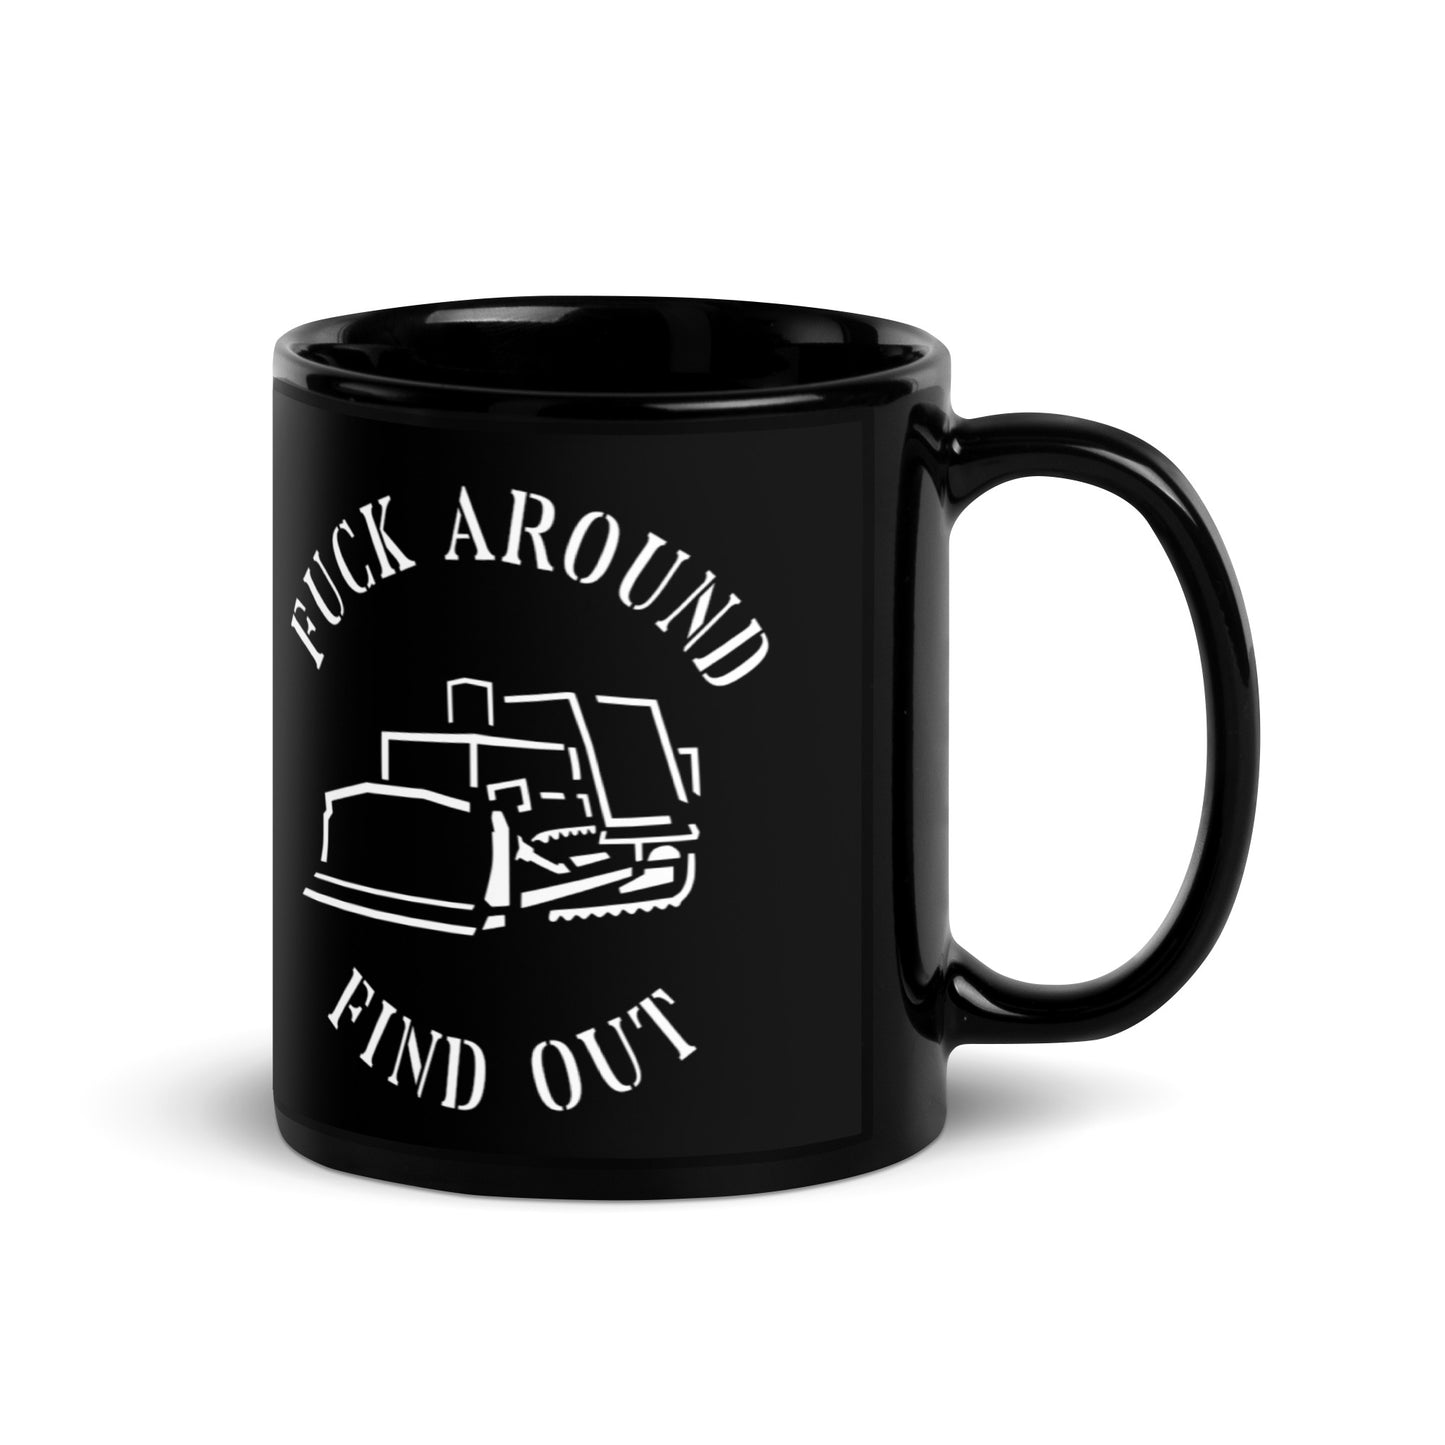 Fuck Around, Find Out - Killdozer Mug